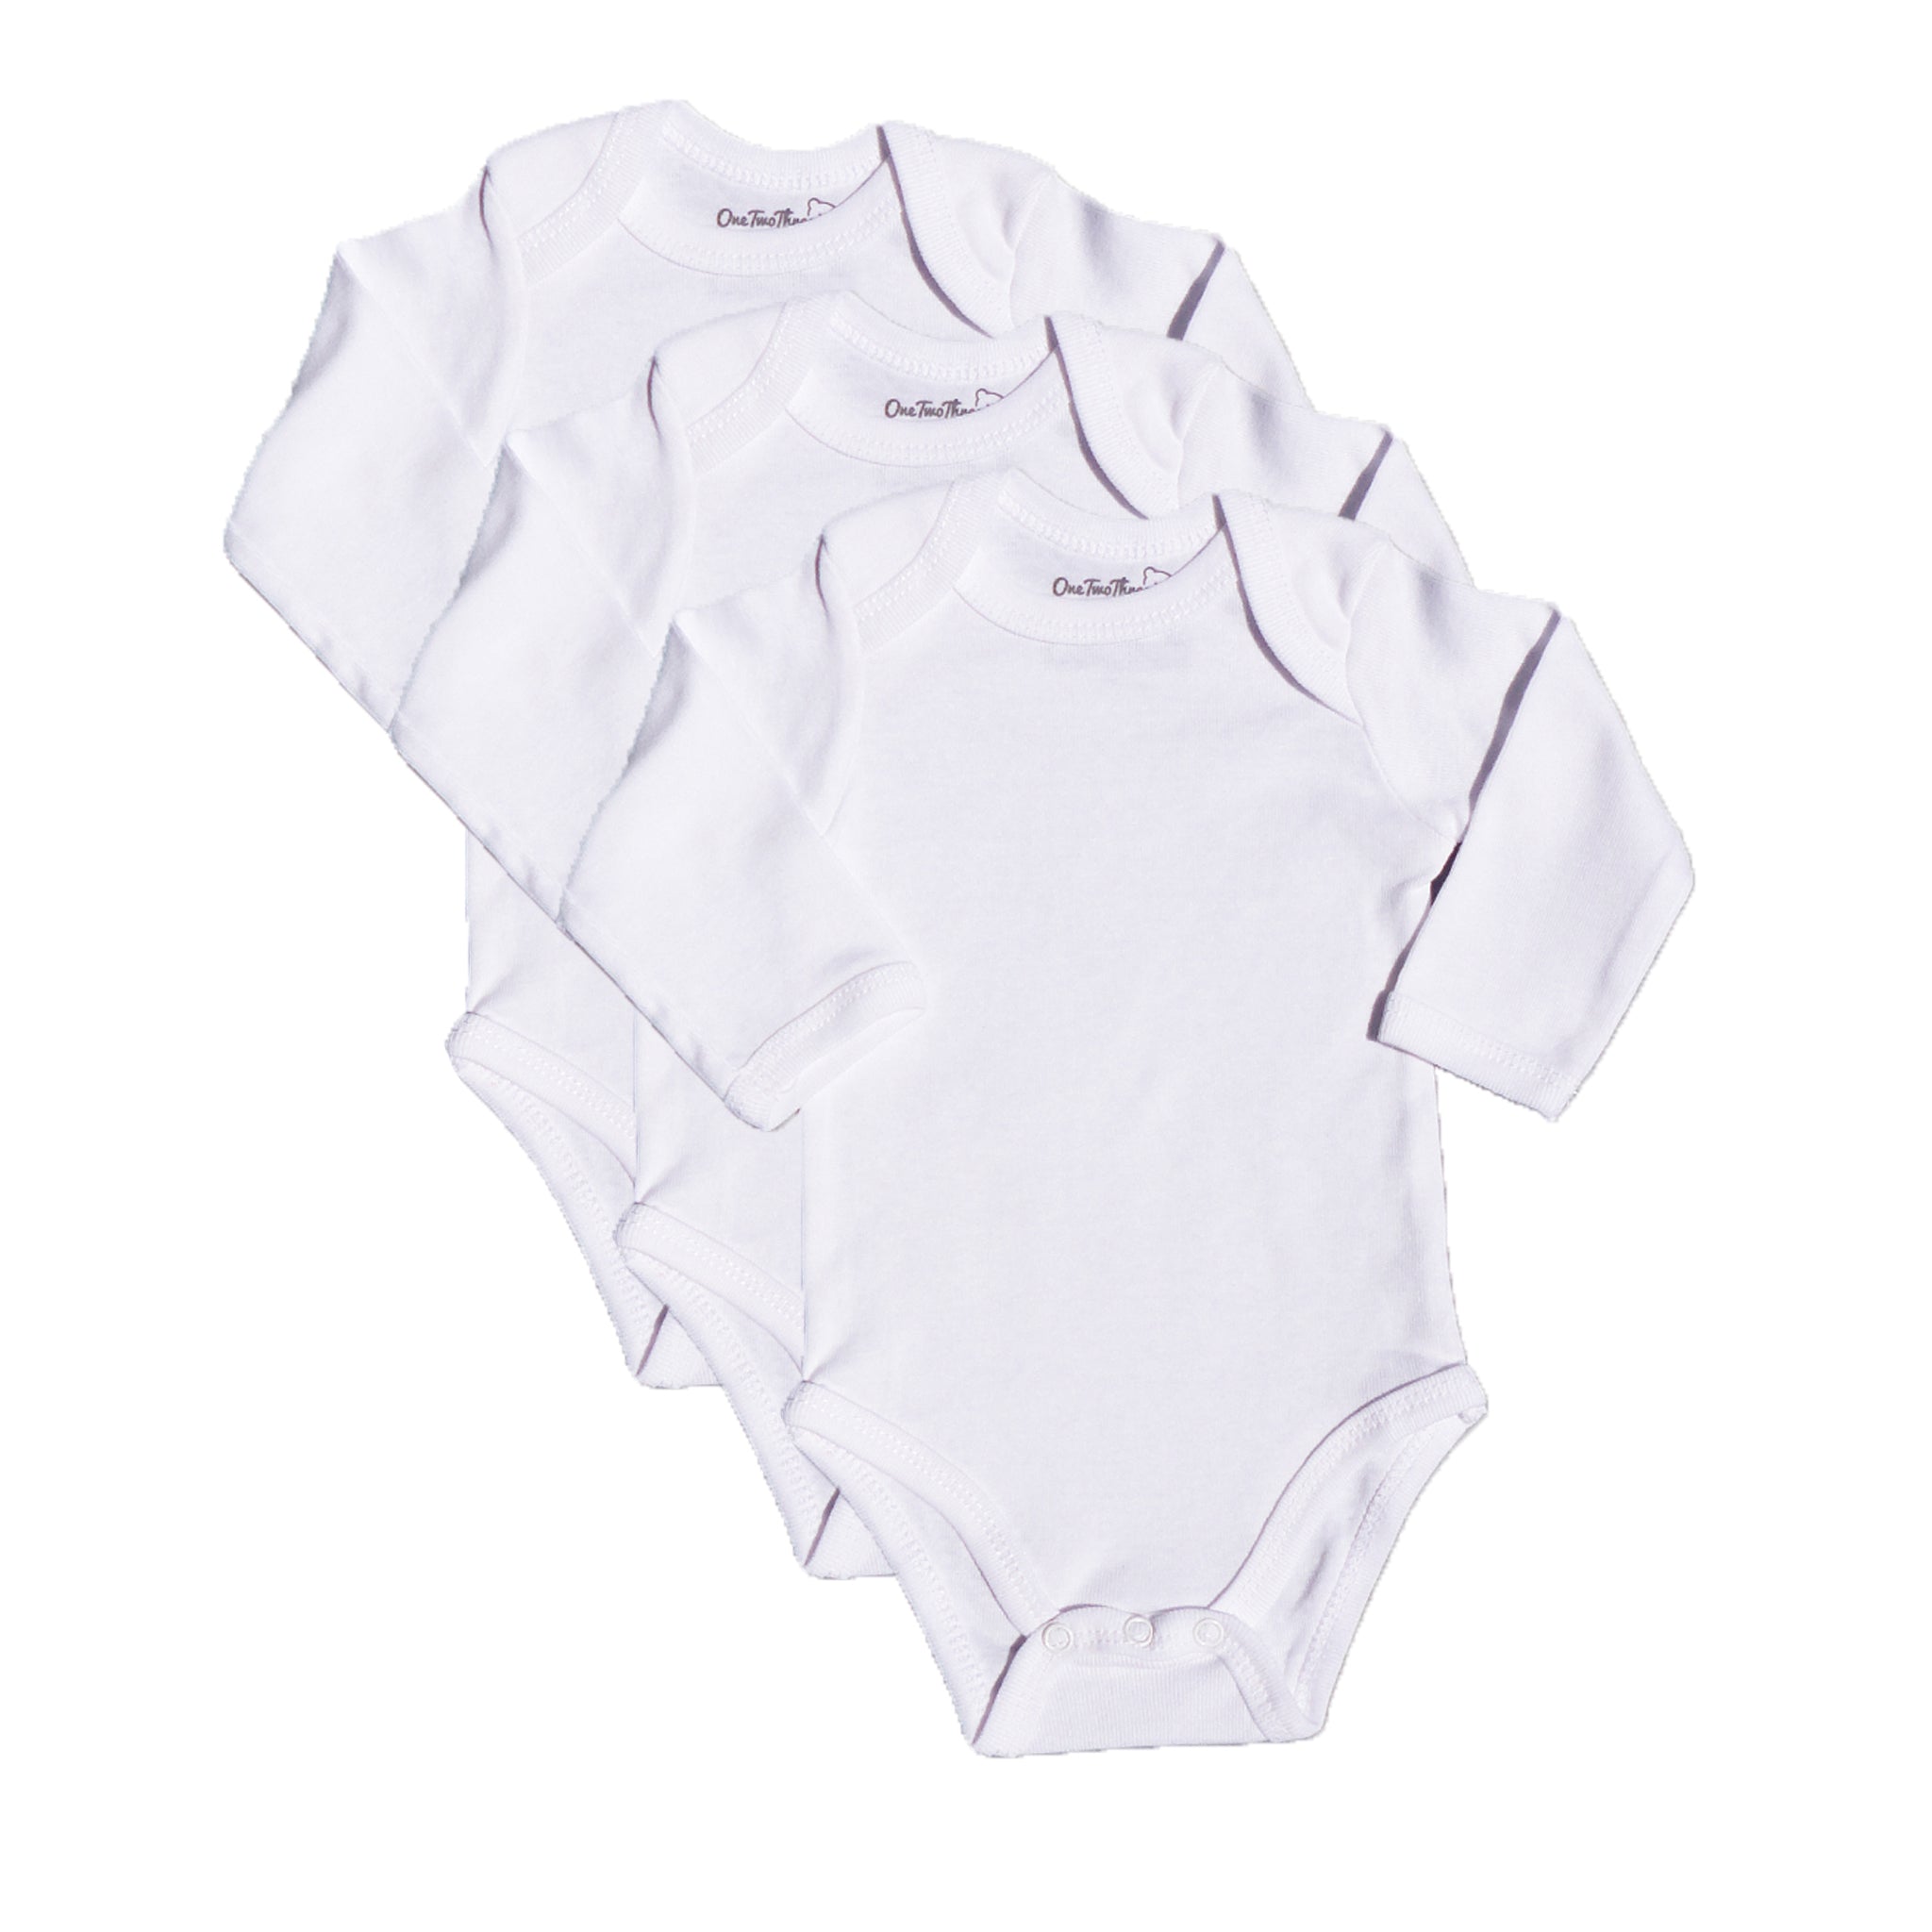 3 Pack Long Sleeve Baby Bodysuit White 100% cotton